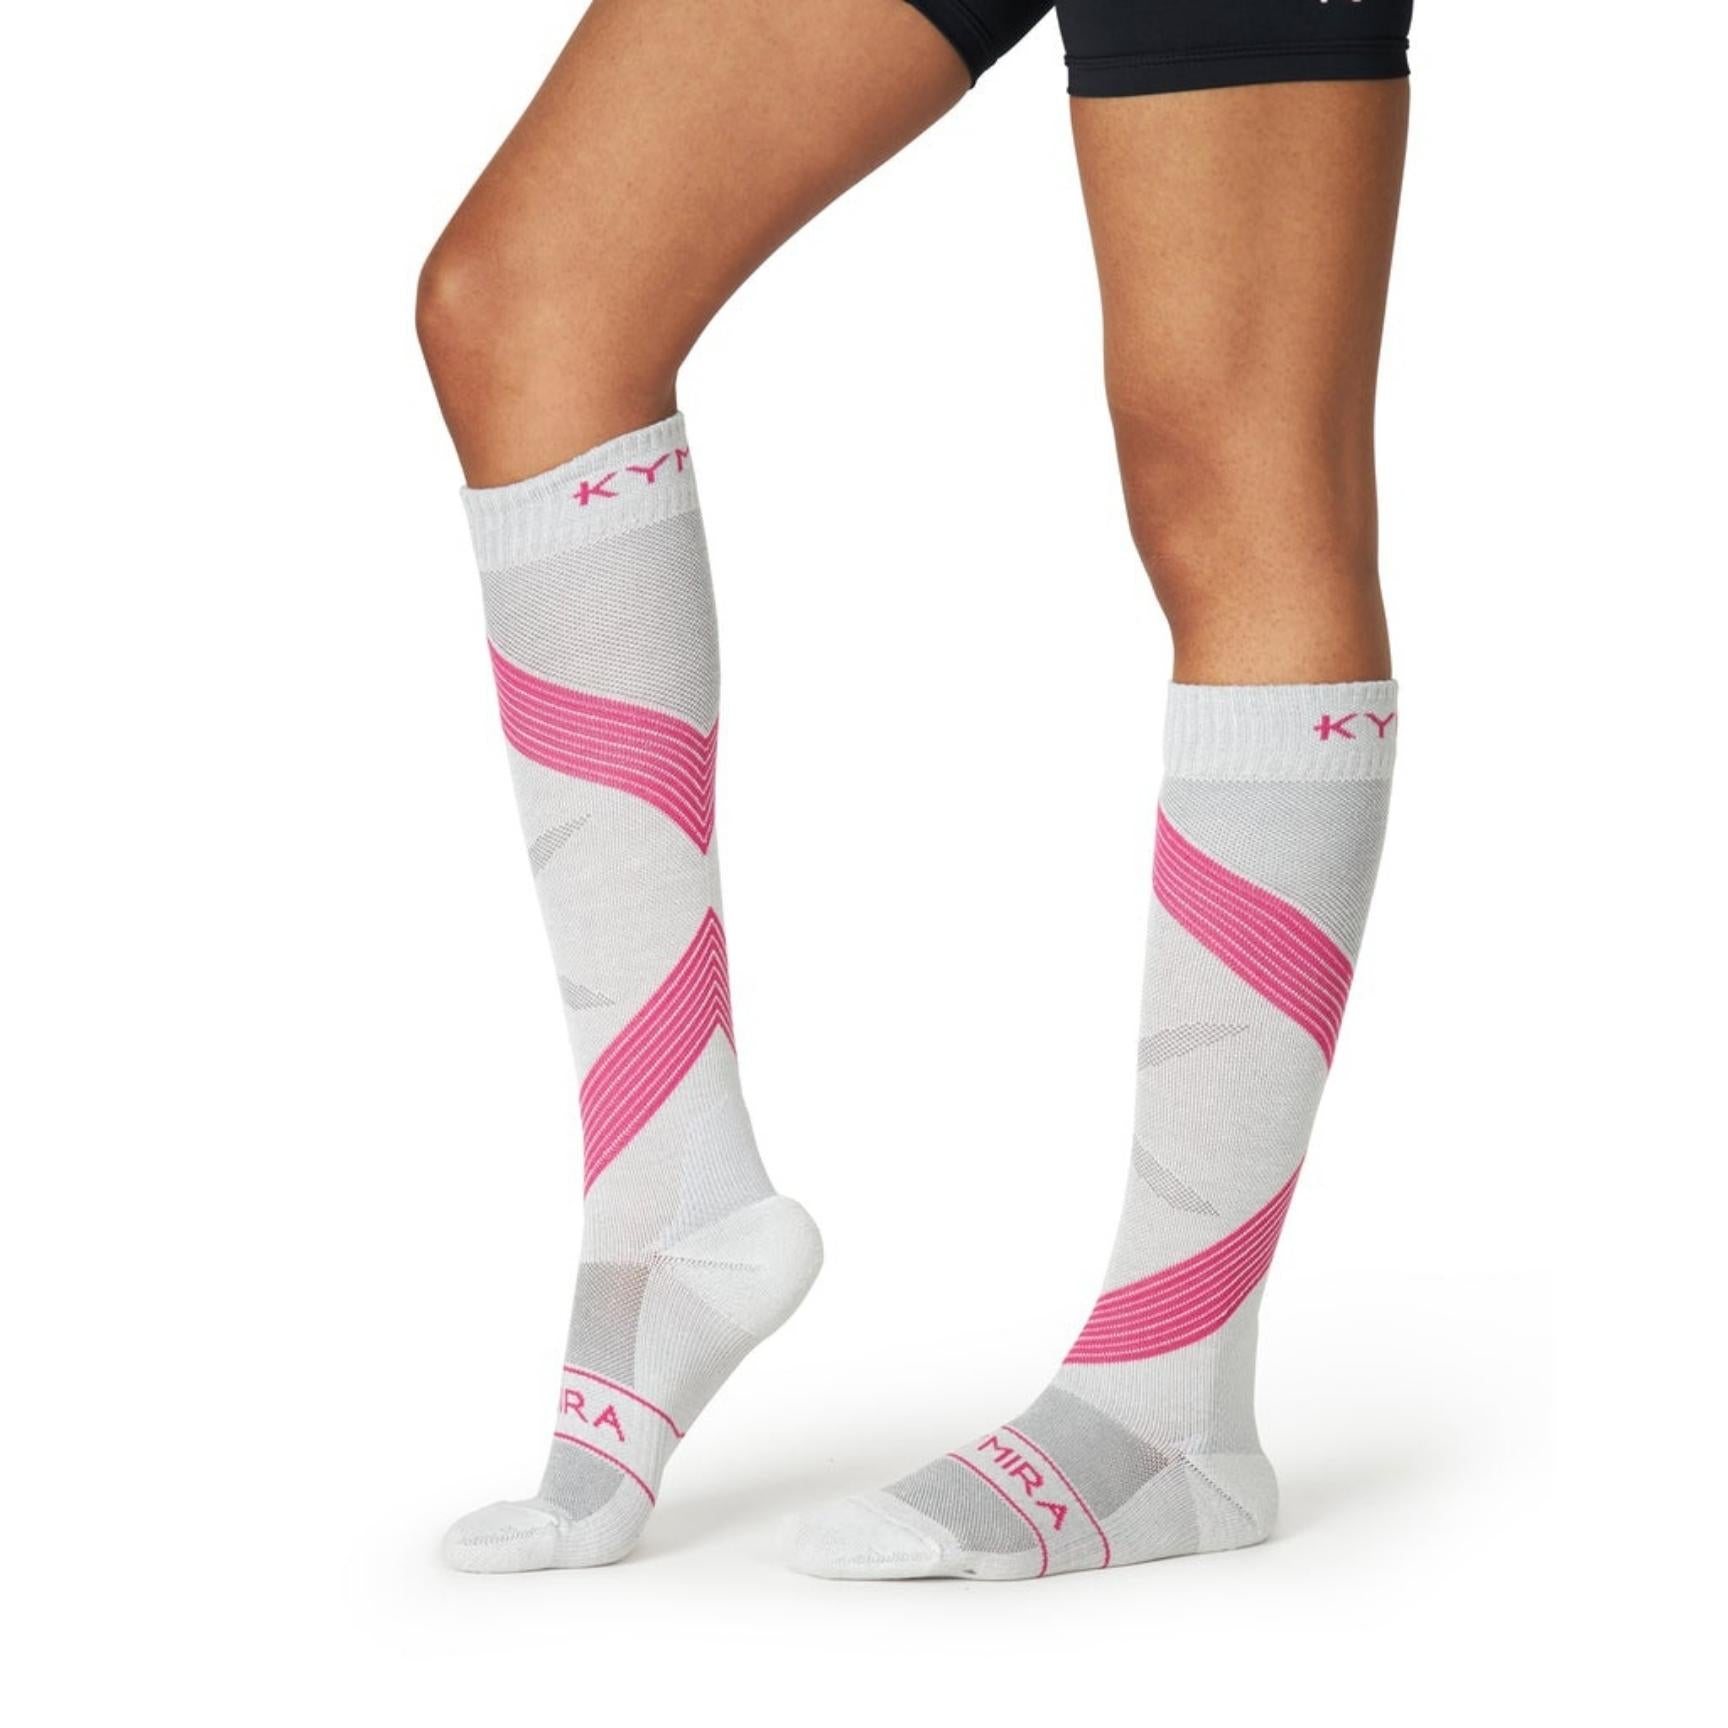 KYMIRA Infrared Compression Socks - White/Pink